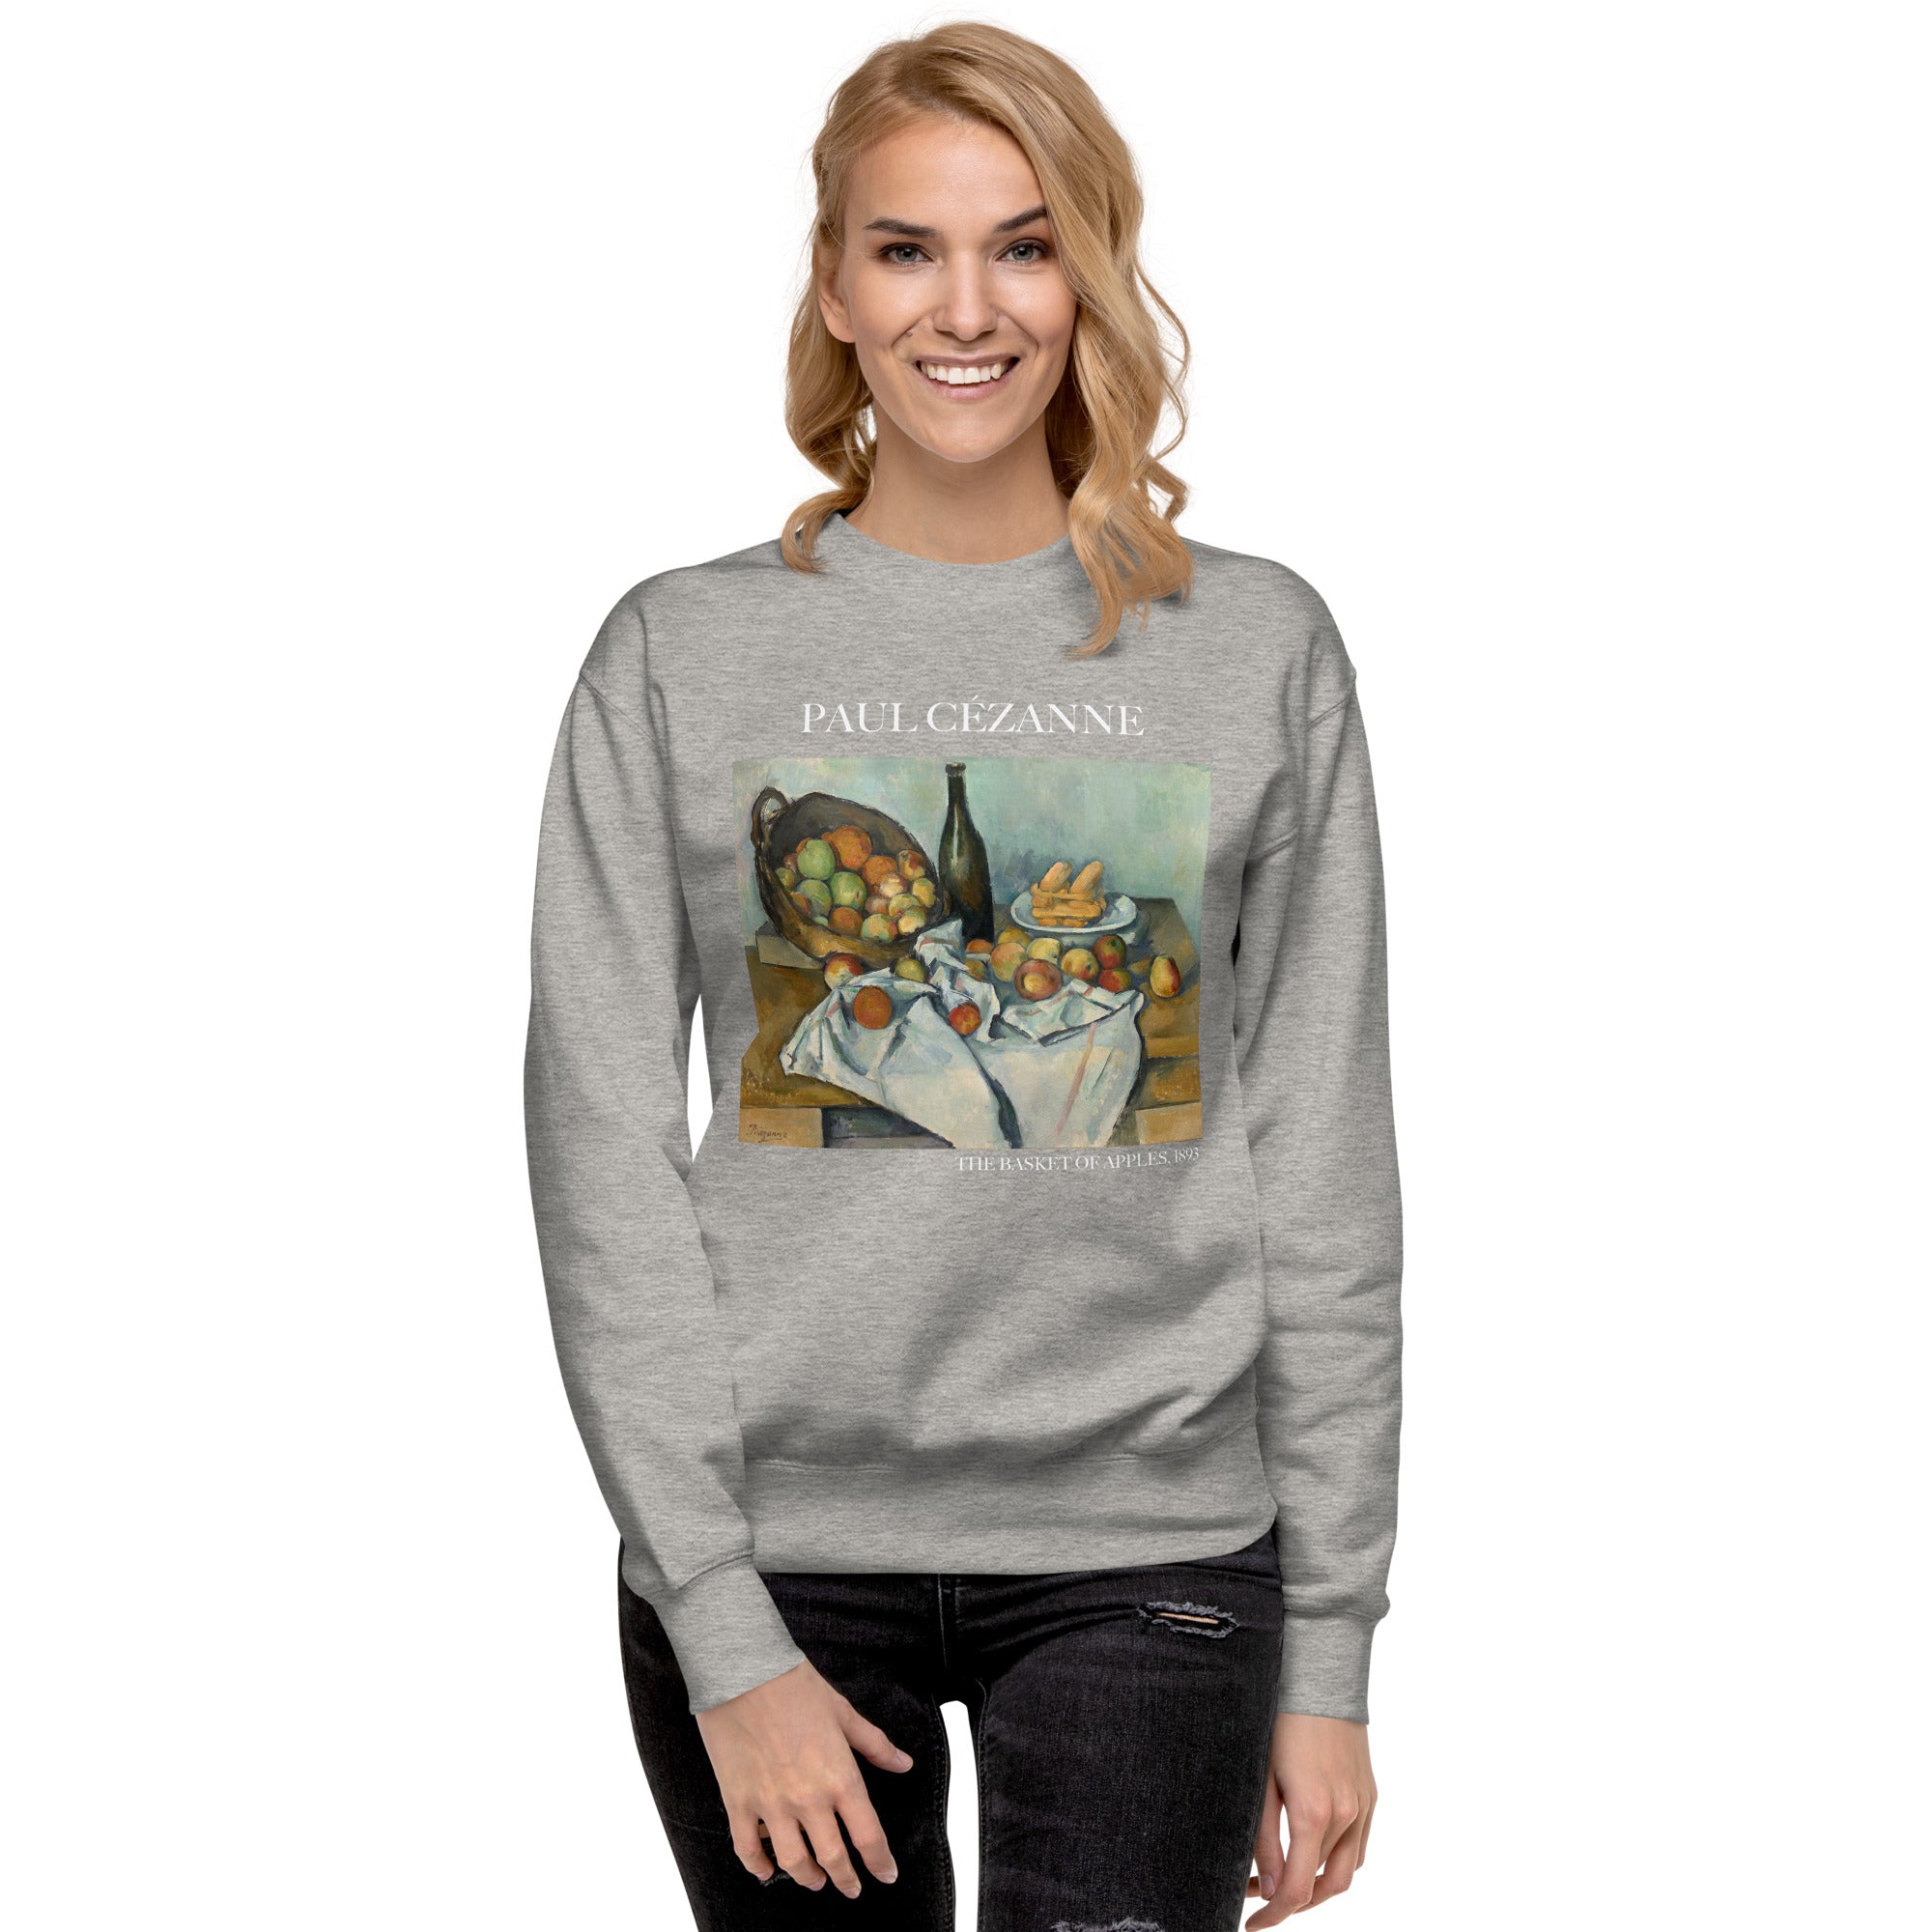 Paul Cézanne 'The Basket of Apples' Famous Painting Sweatshirt | Unisex Premium Sweatshirt